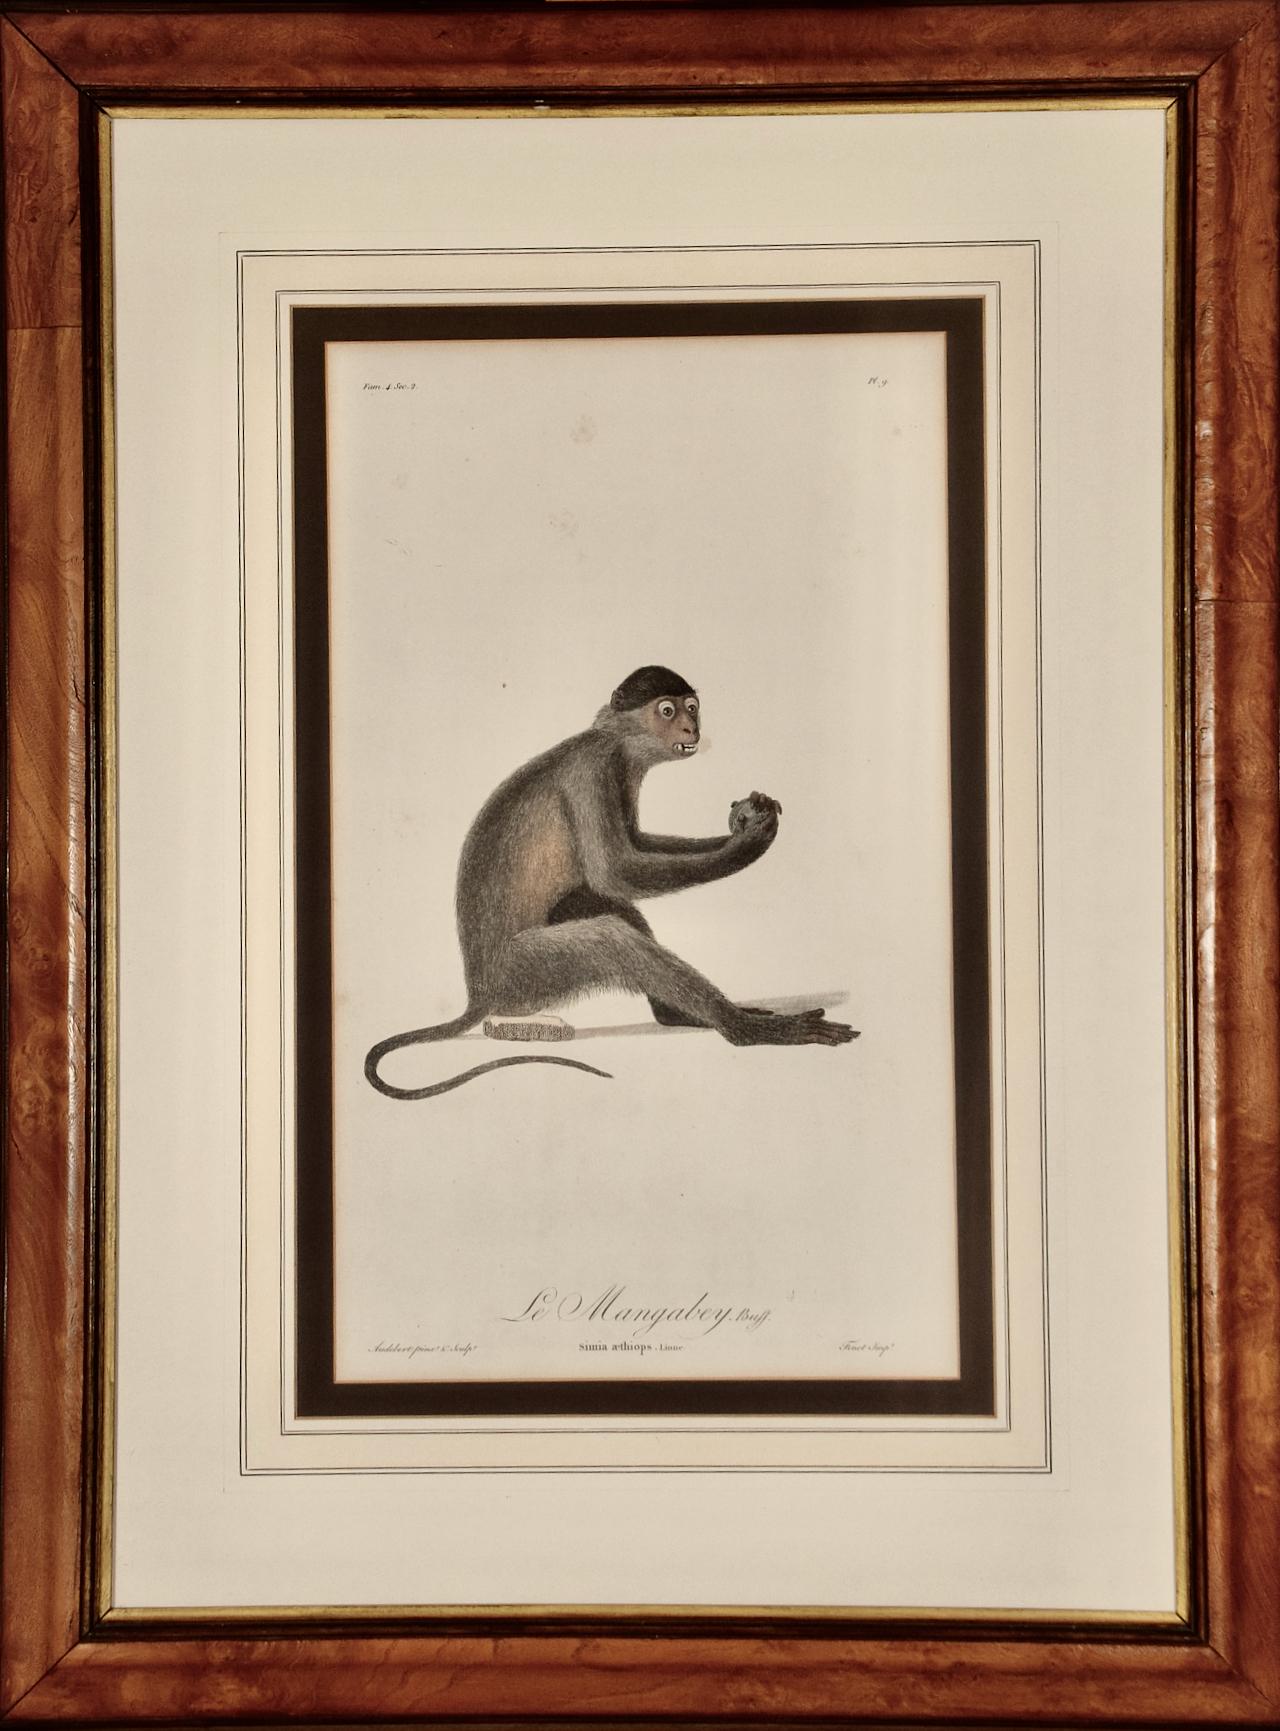 Jean Baptiste Auderbert Portrait Print -  Le Mangabey Monkey: Framed Audebert 18th C. Hand-colored Engraving